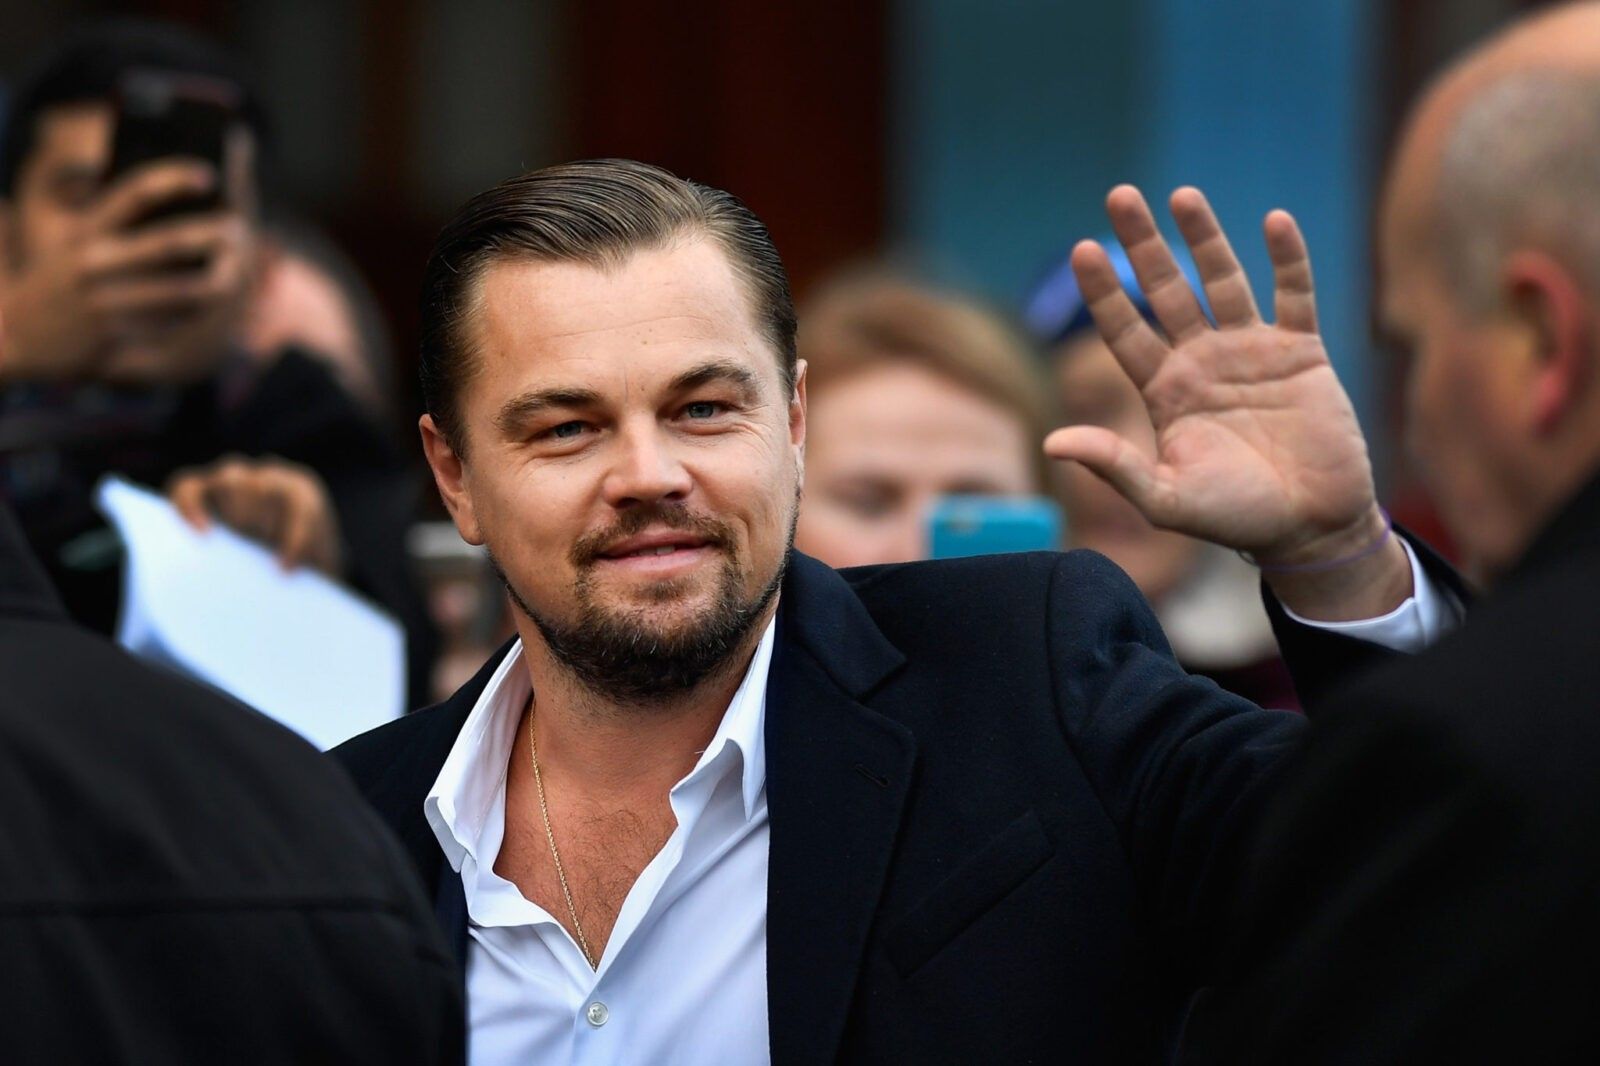 Leonardo Di Caprio in white shirt waving to fans.